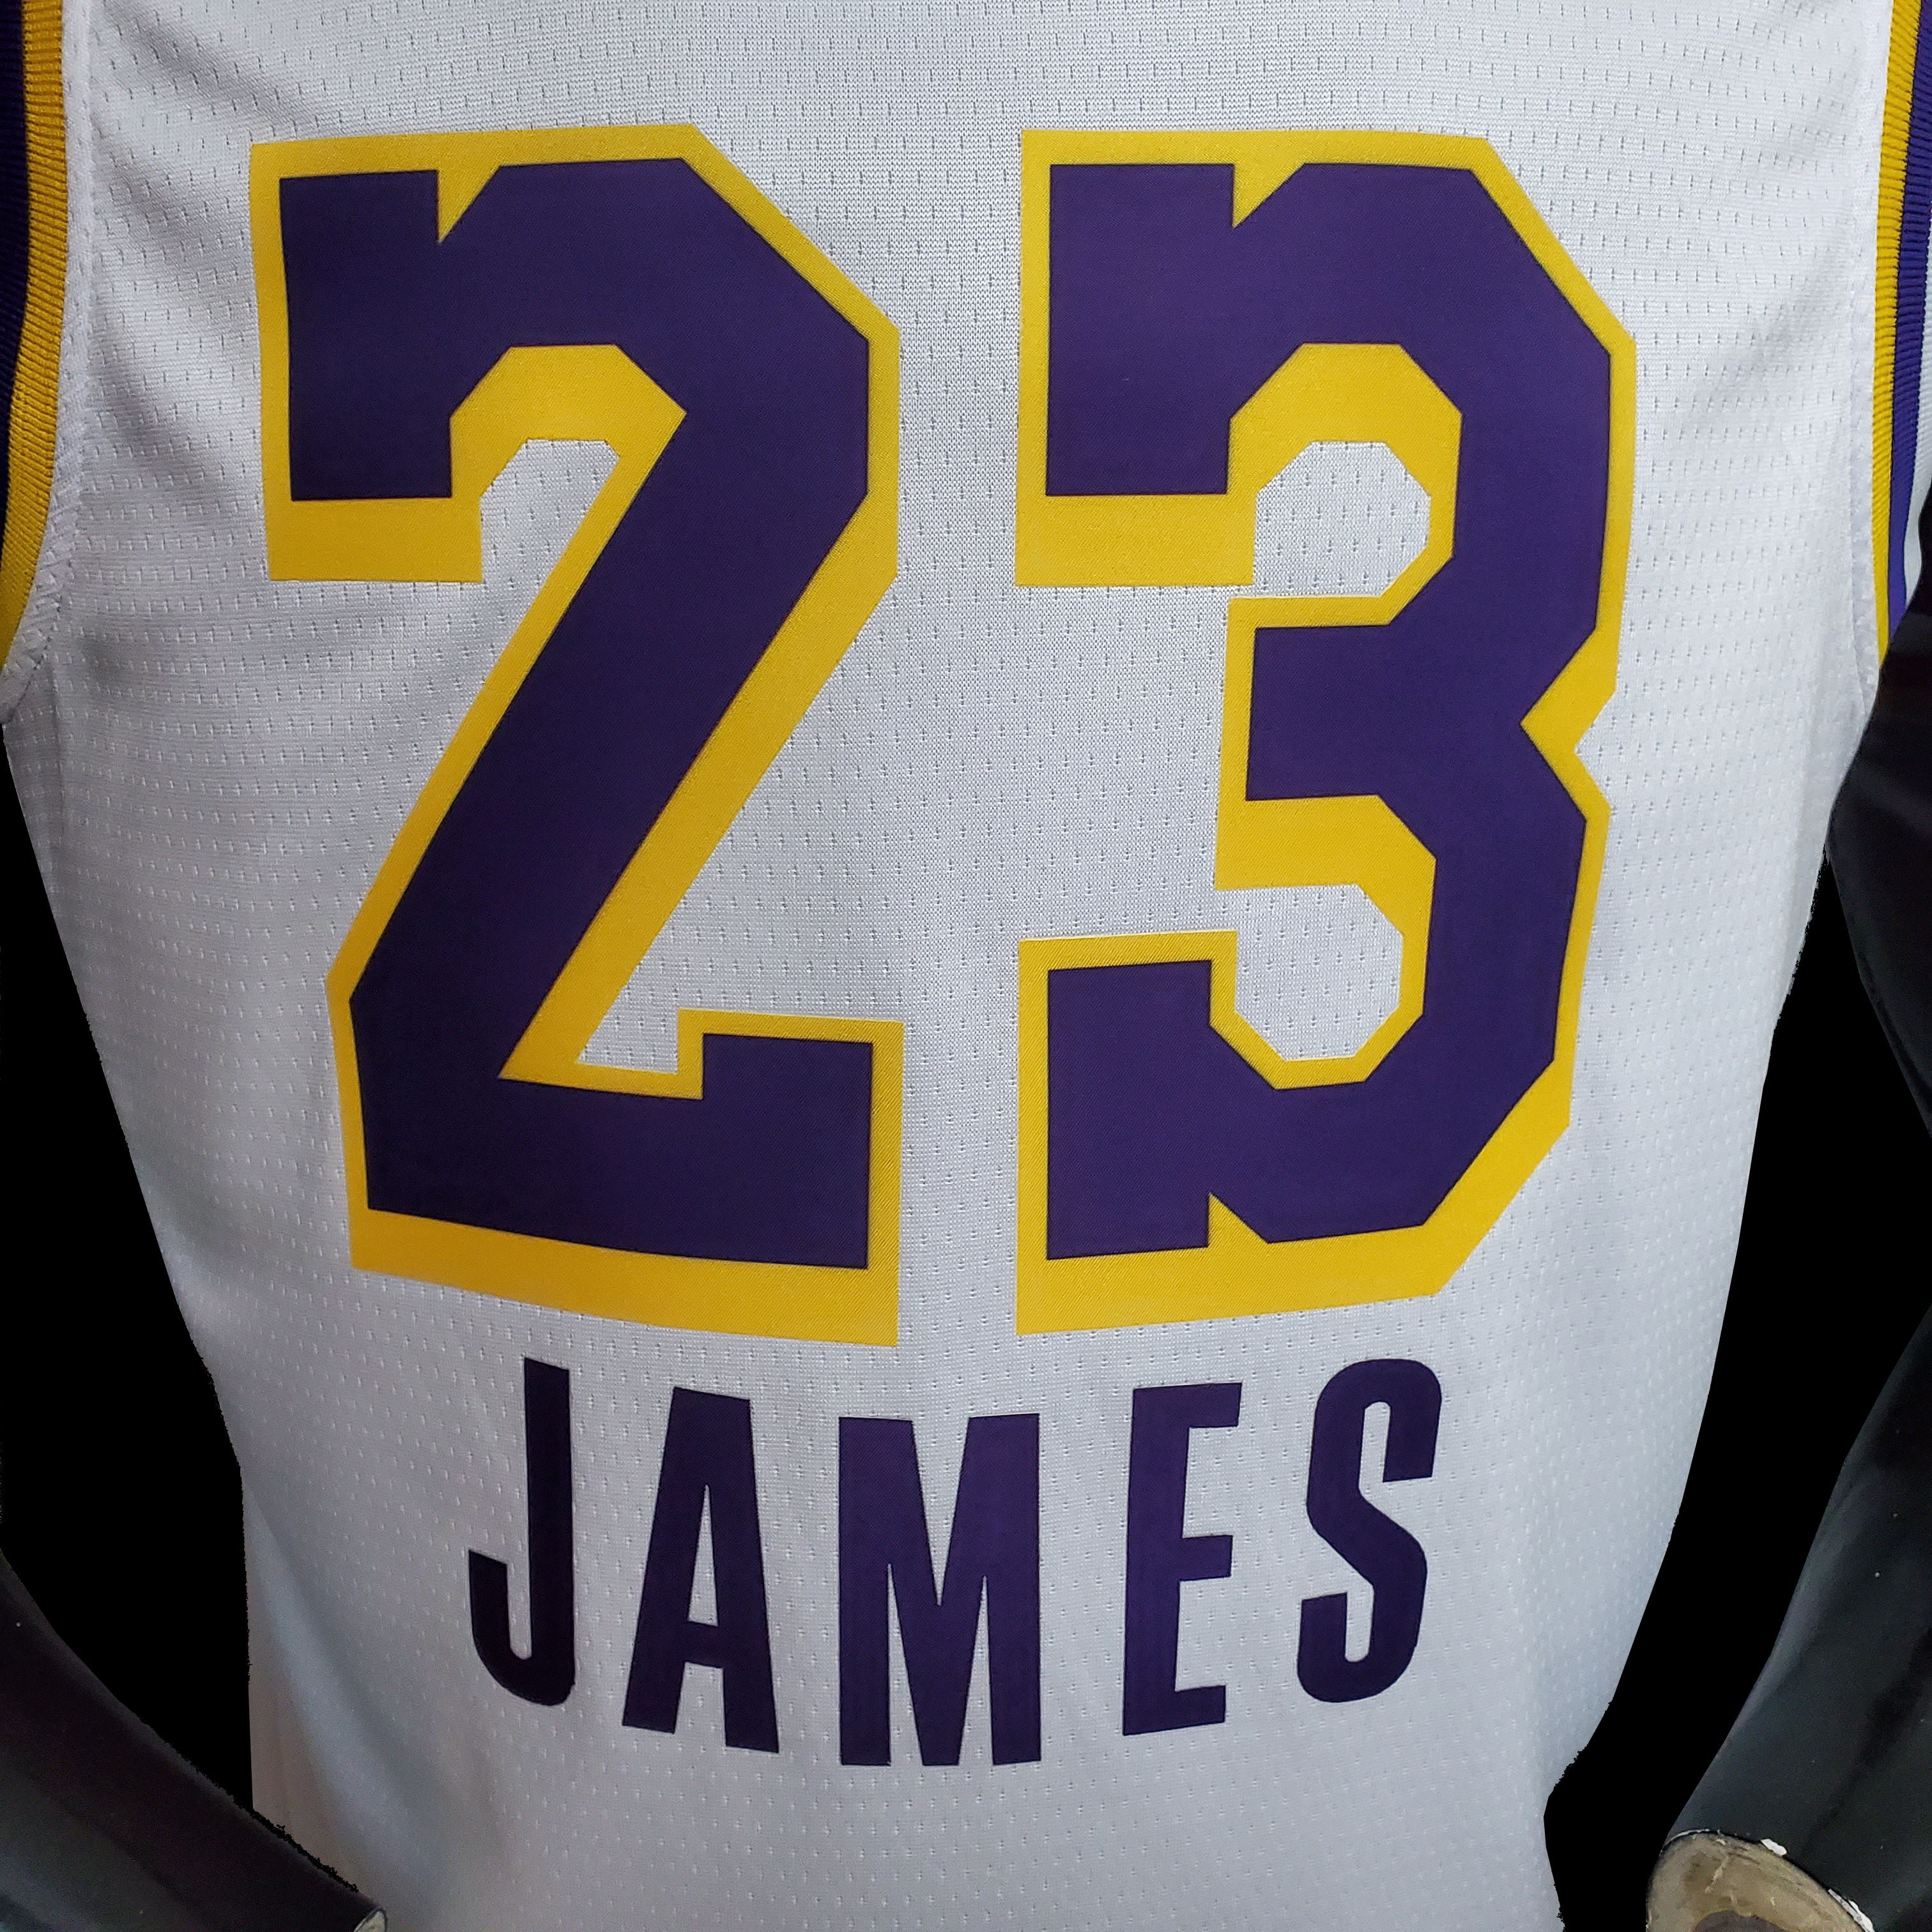 Nike NBA Los Angeles Lakers LeBron James No. 23 Jersey White AA7101-11 -  KICKS CREW